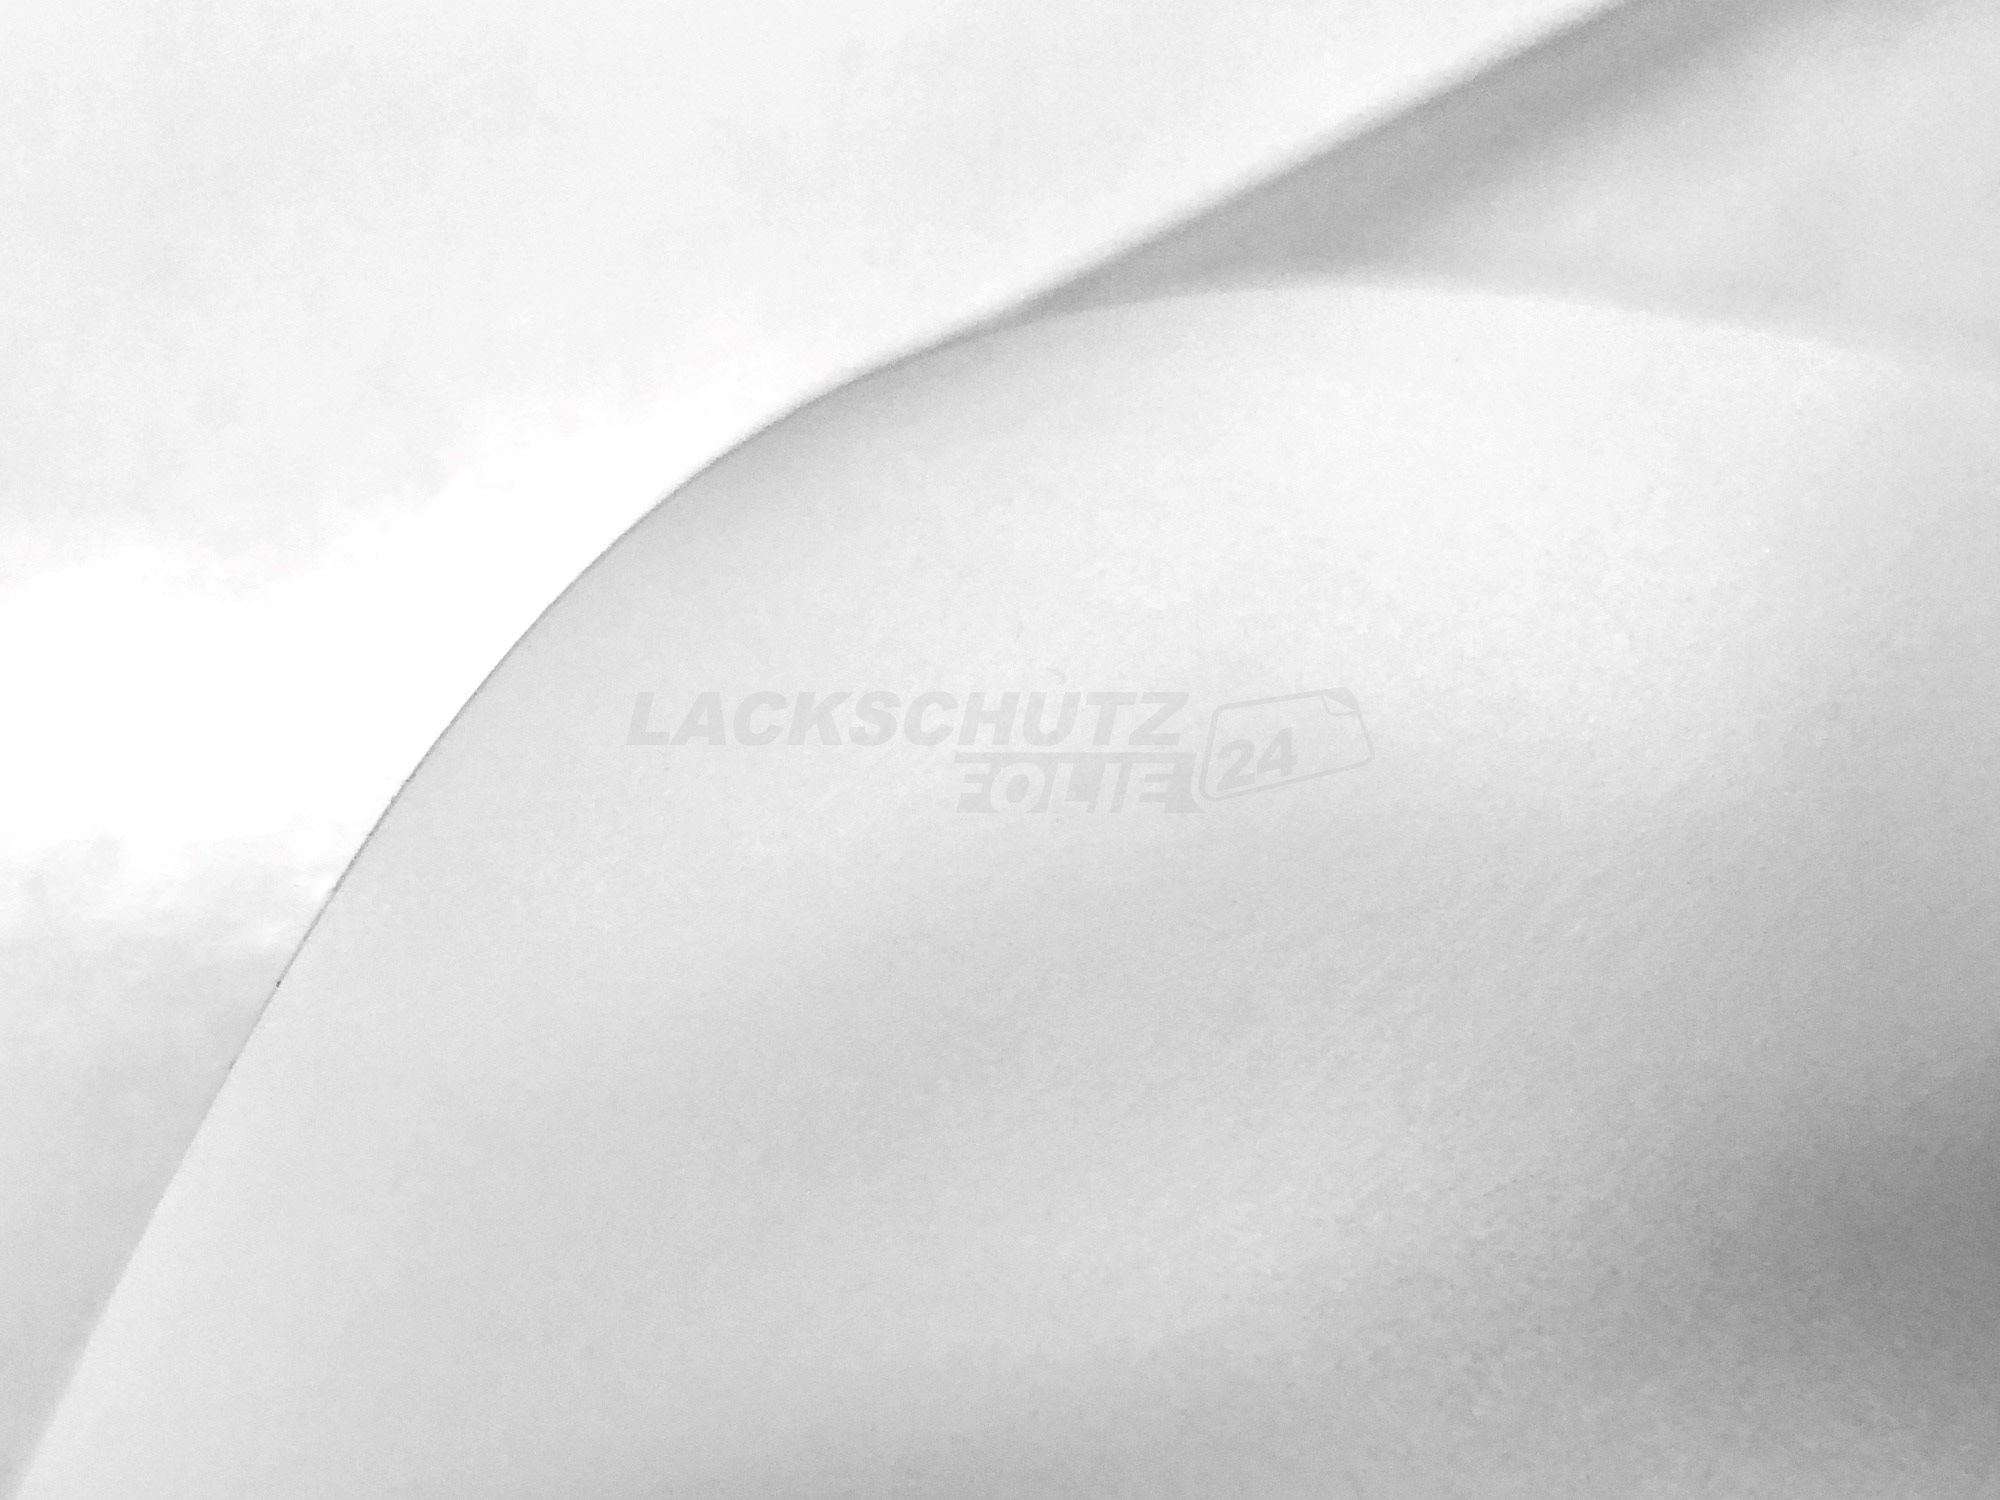 Ladekantenschutzfolie - Transparent Glatt MATT 110 µm stark  für BMW X1 Typ E84, BJ 08/2009-2015